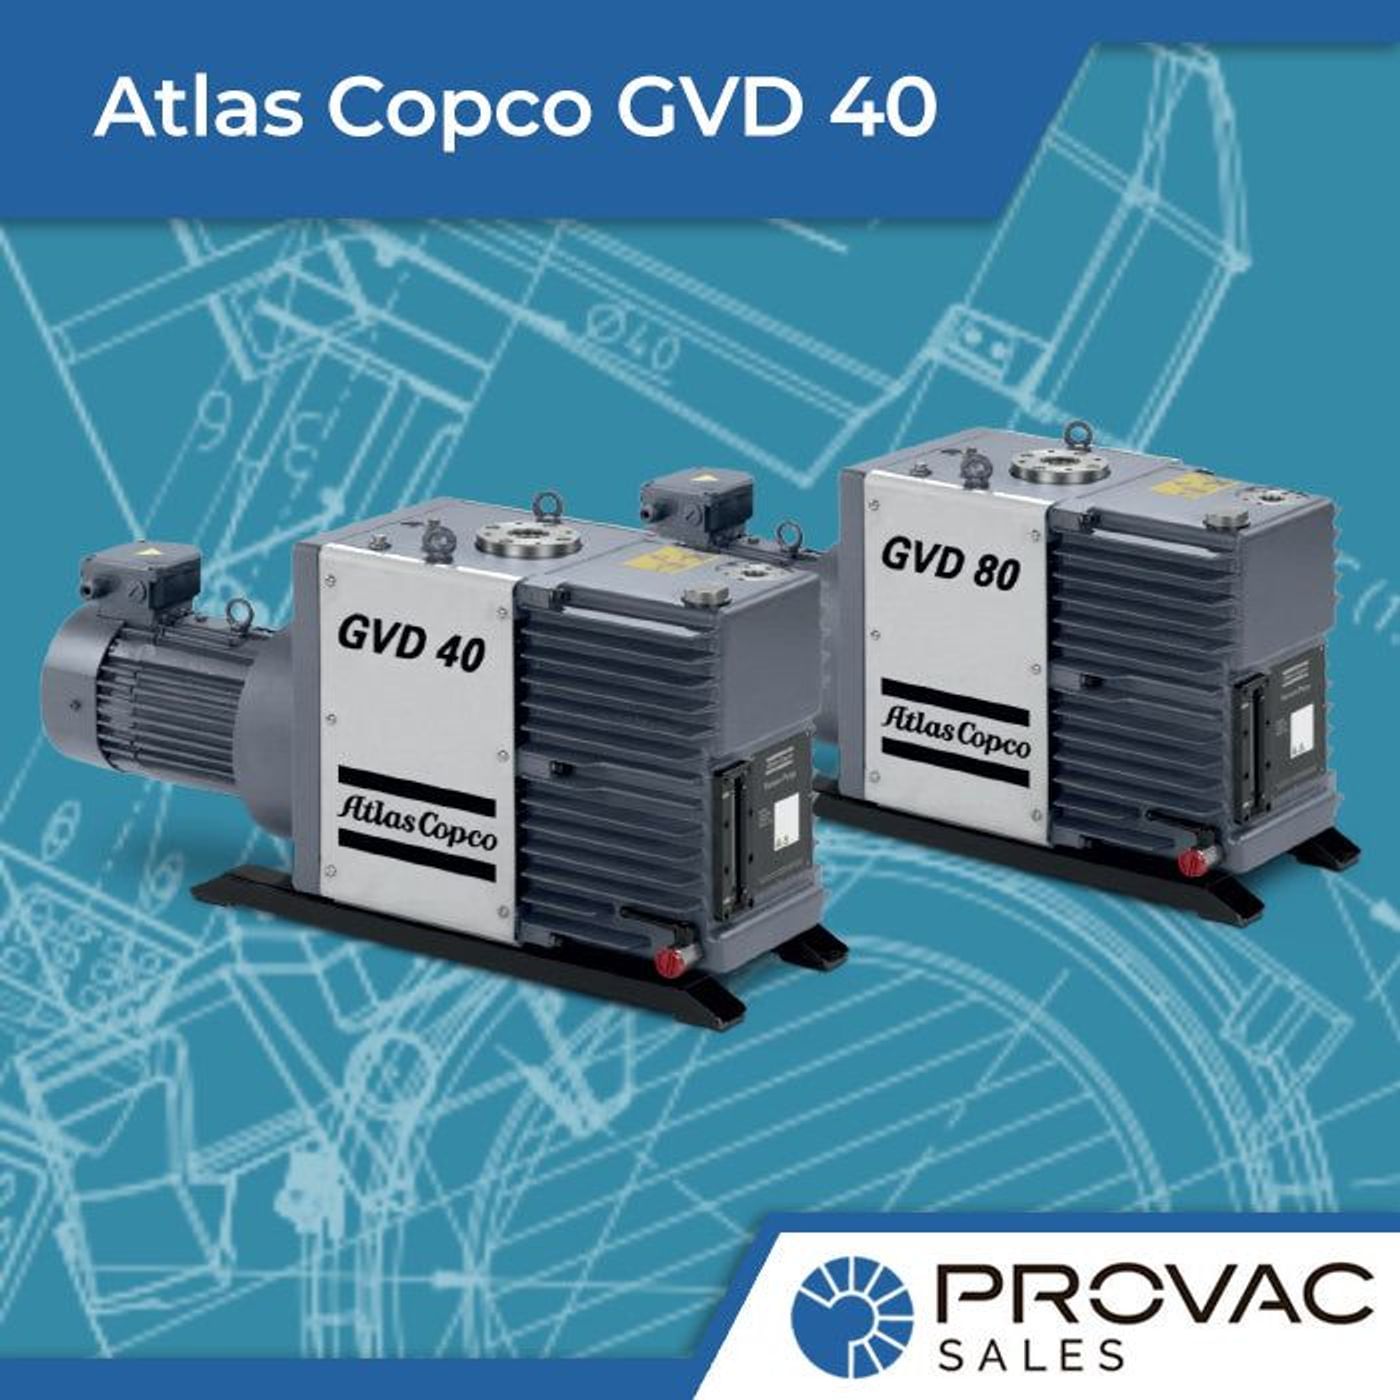 On Sale Now: Atlas Copco GVD 40 Rotary Vane Pump